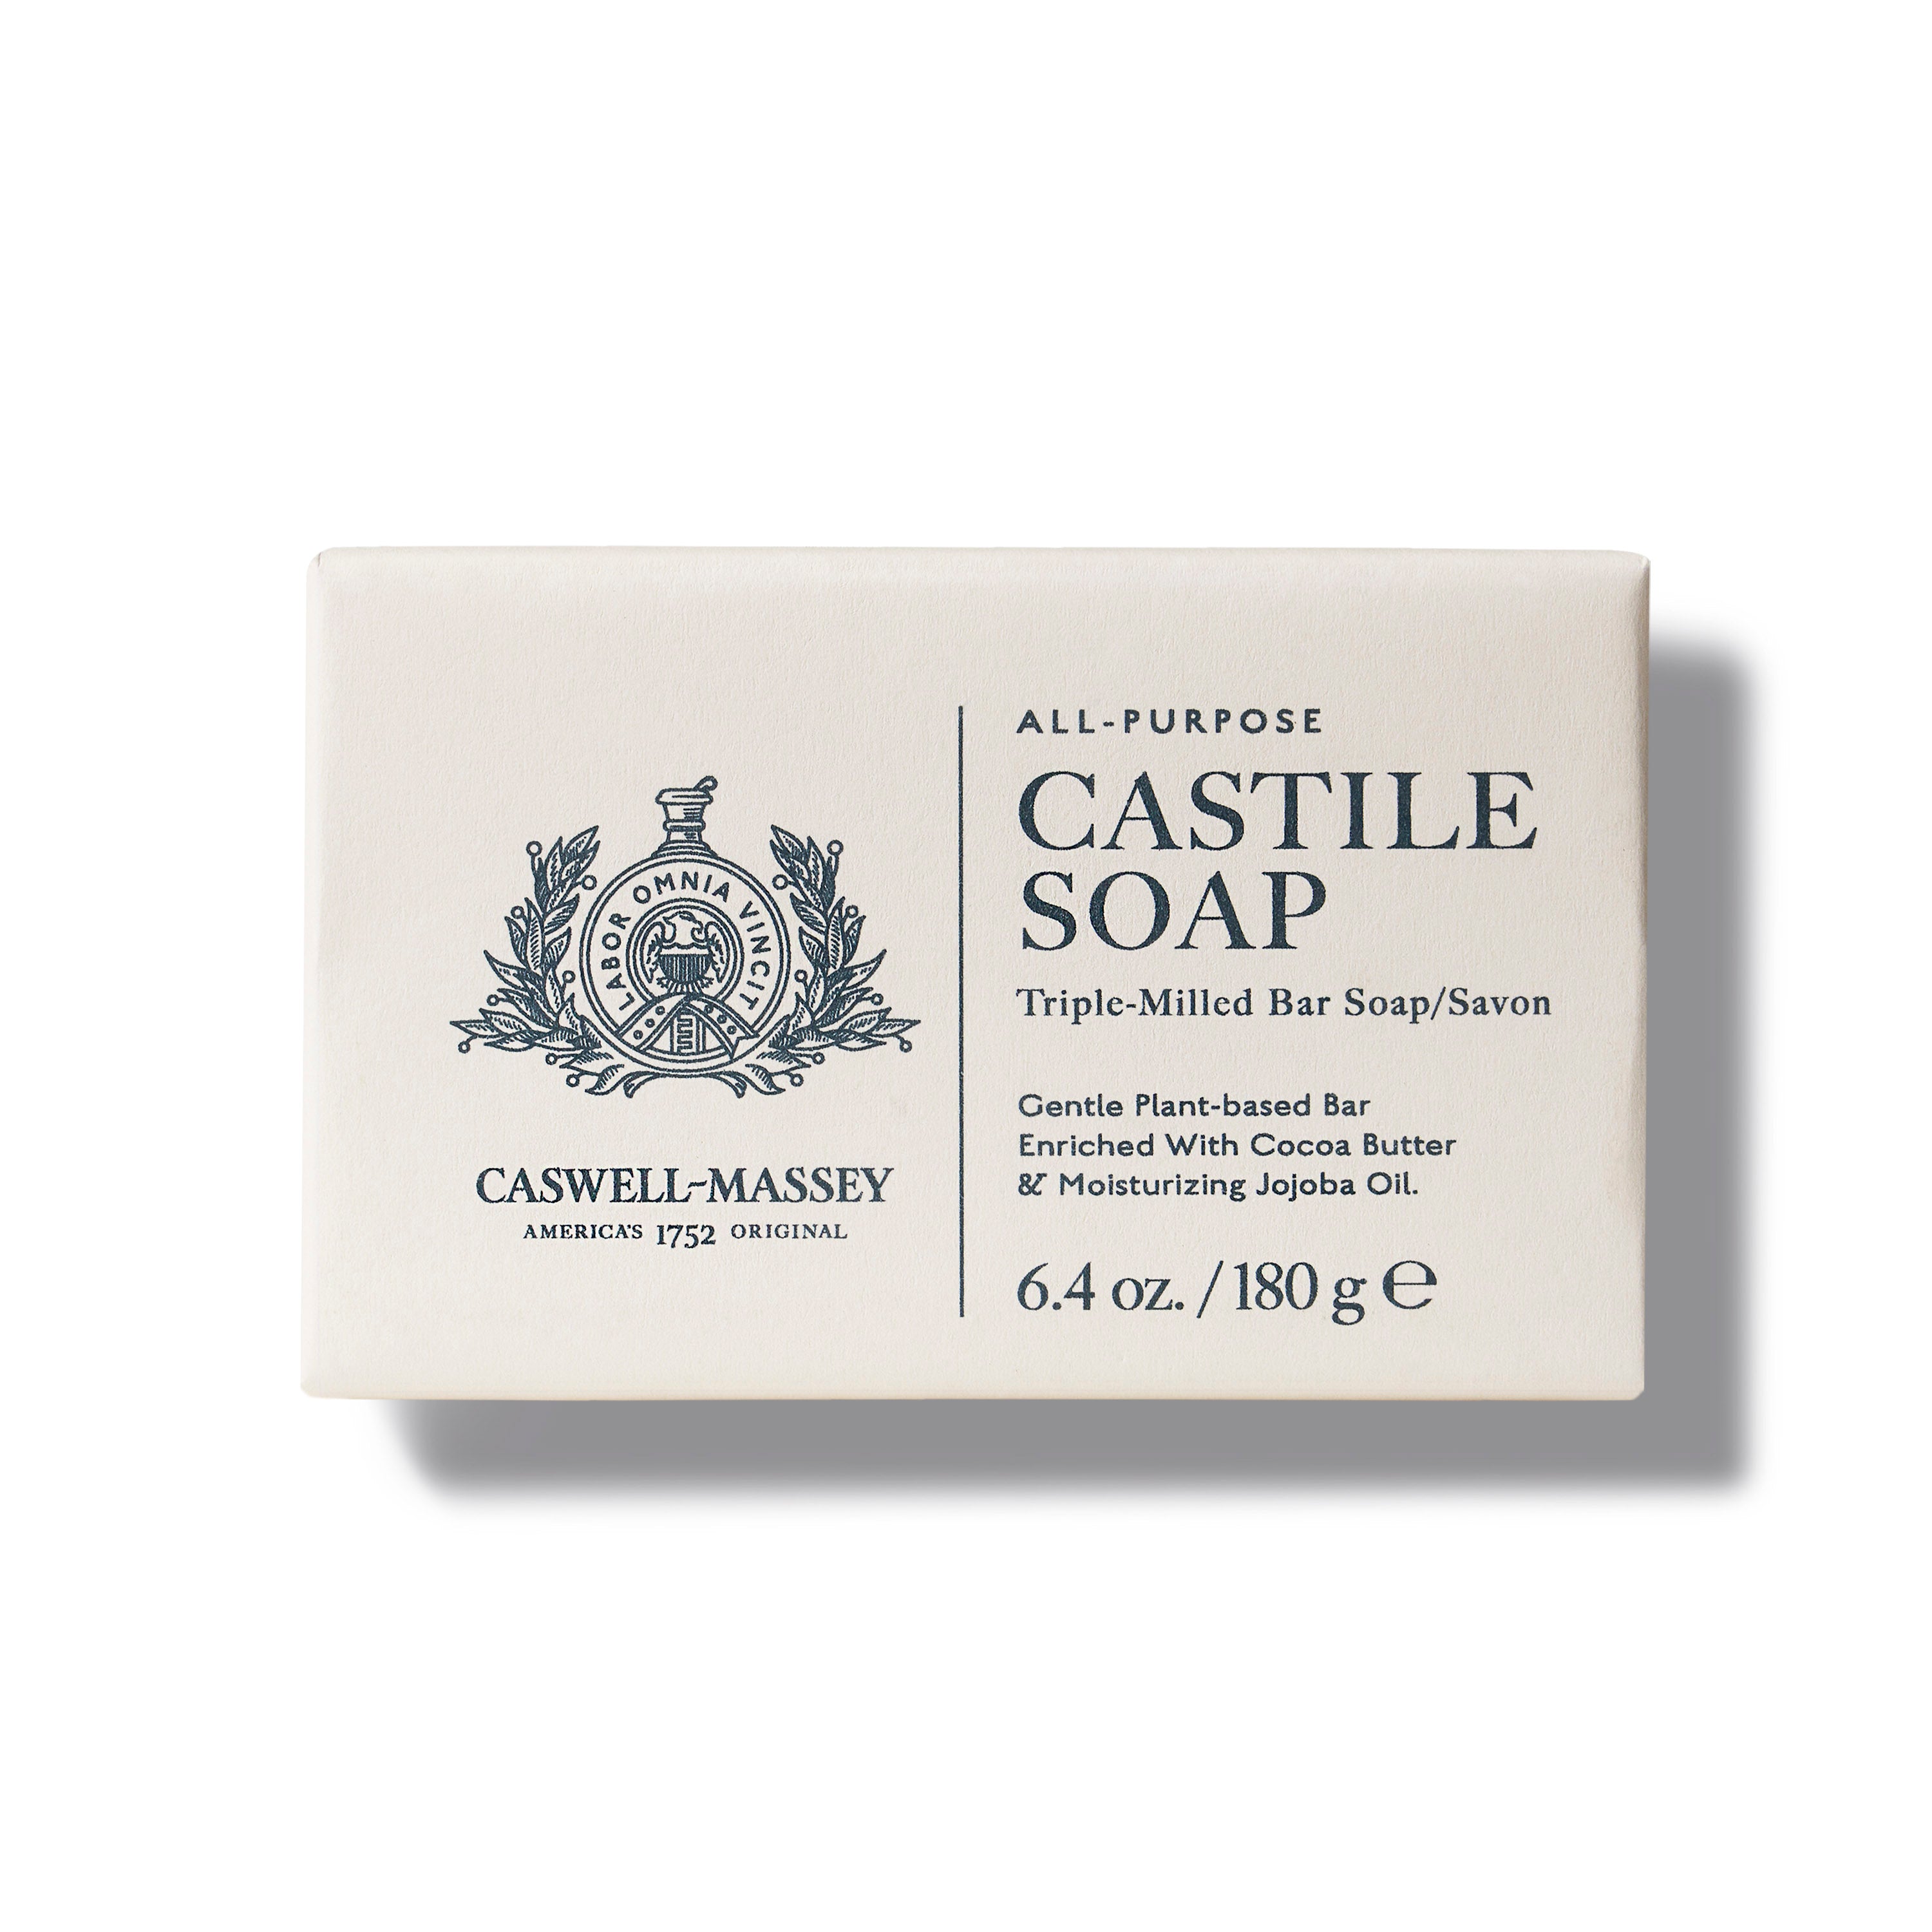 Castile soap Packshot silo